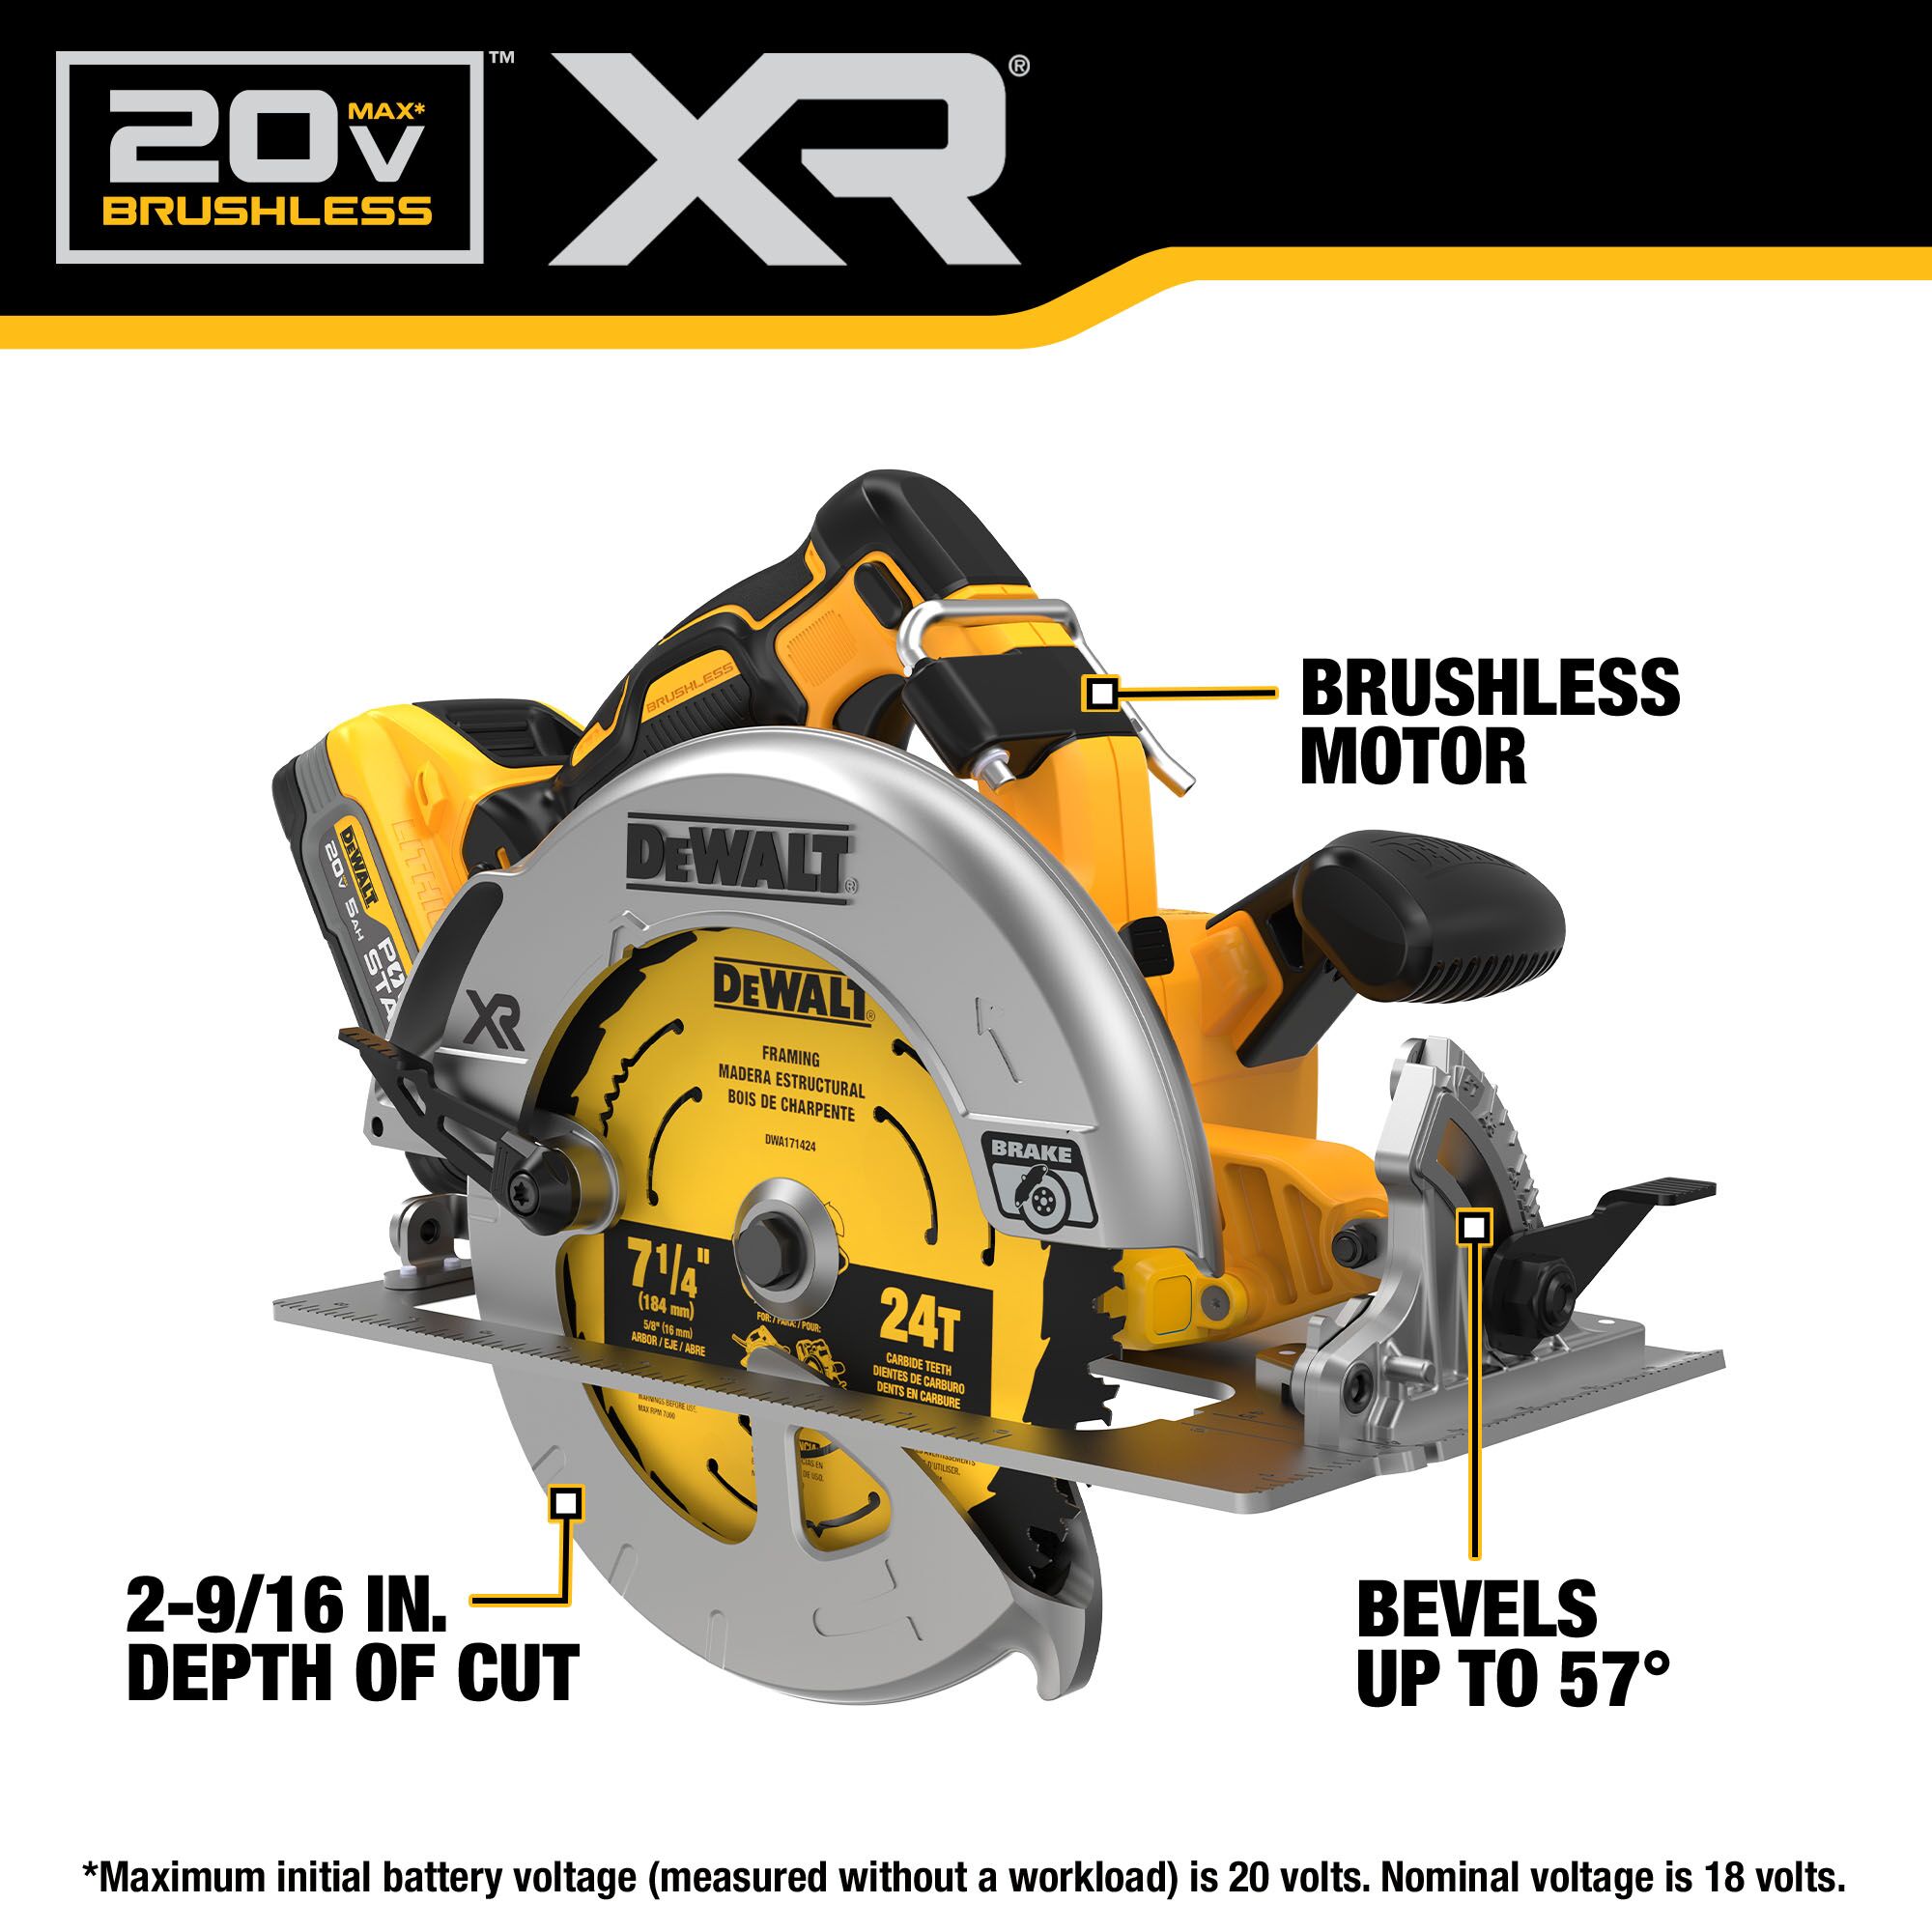 DEWALT XR 20-volt Max 7-1/4-in Brushless Cordless Circular Saw Kit